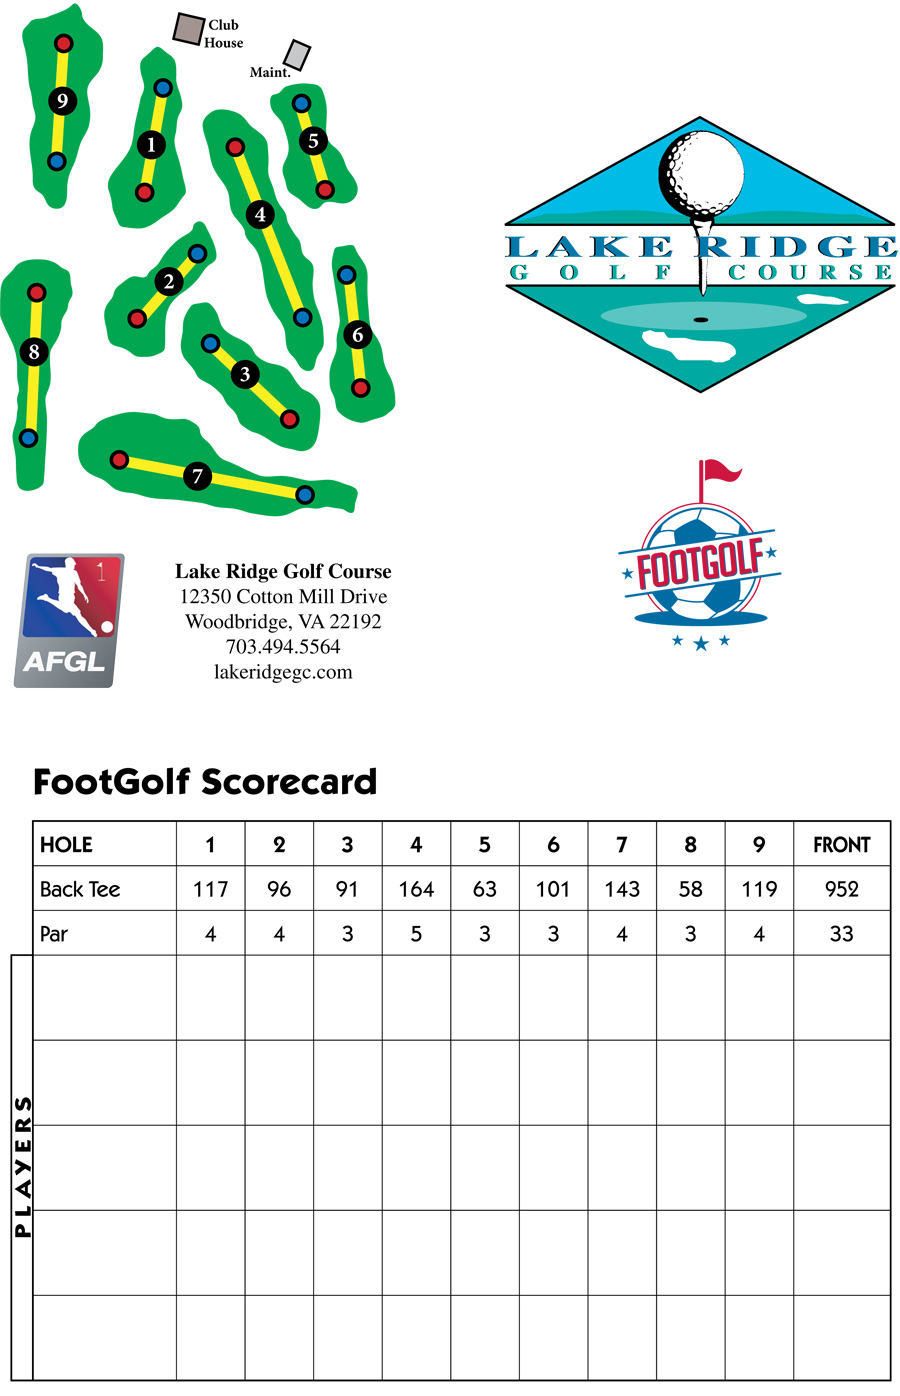 Footgolf Scorecards Golf Associates